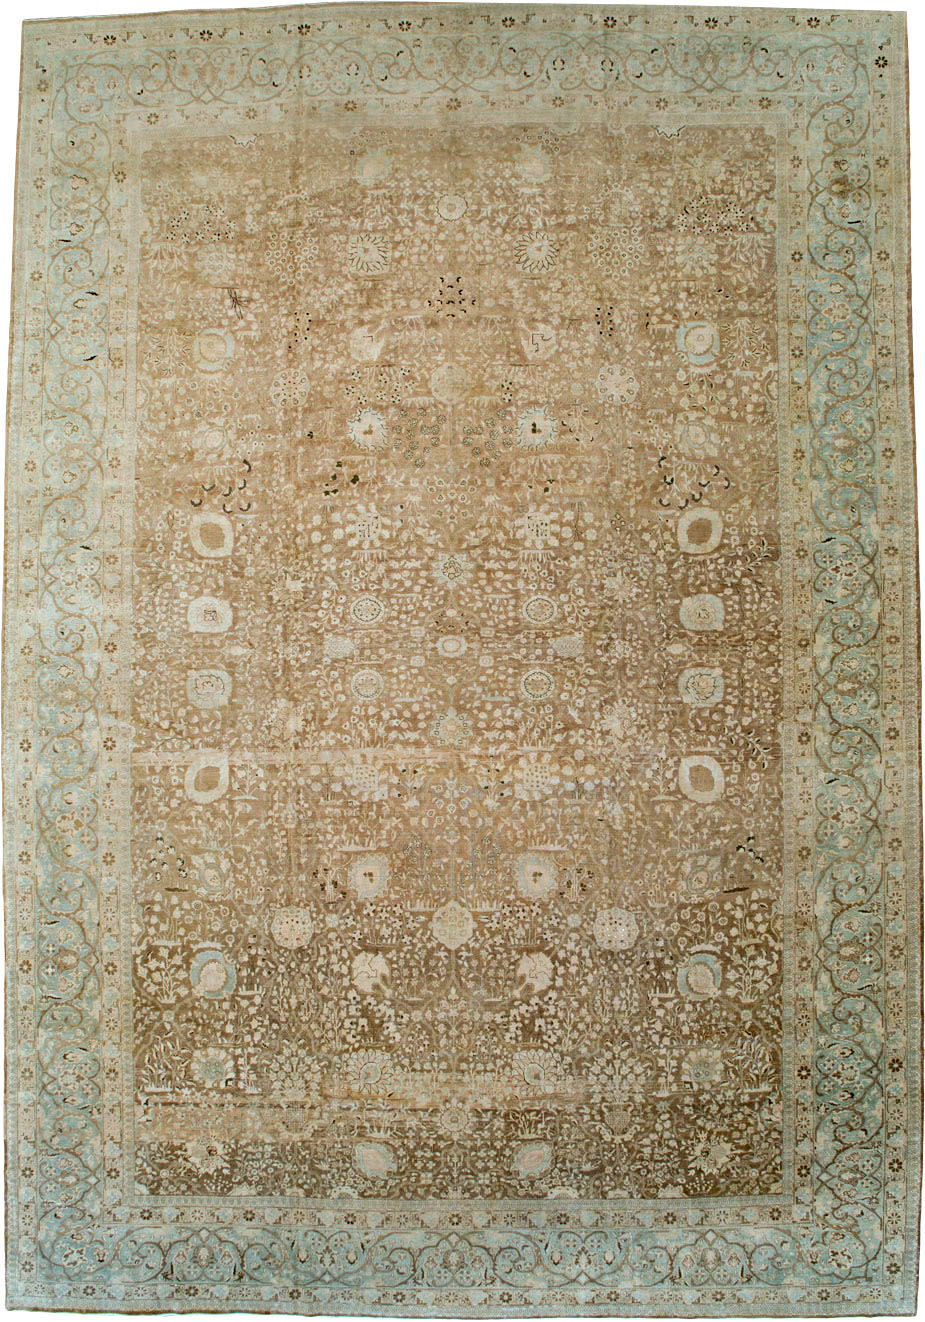 Antique tabriz Carpet - # 55075